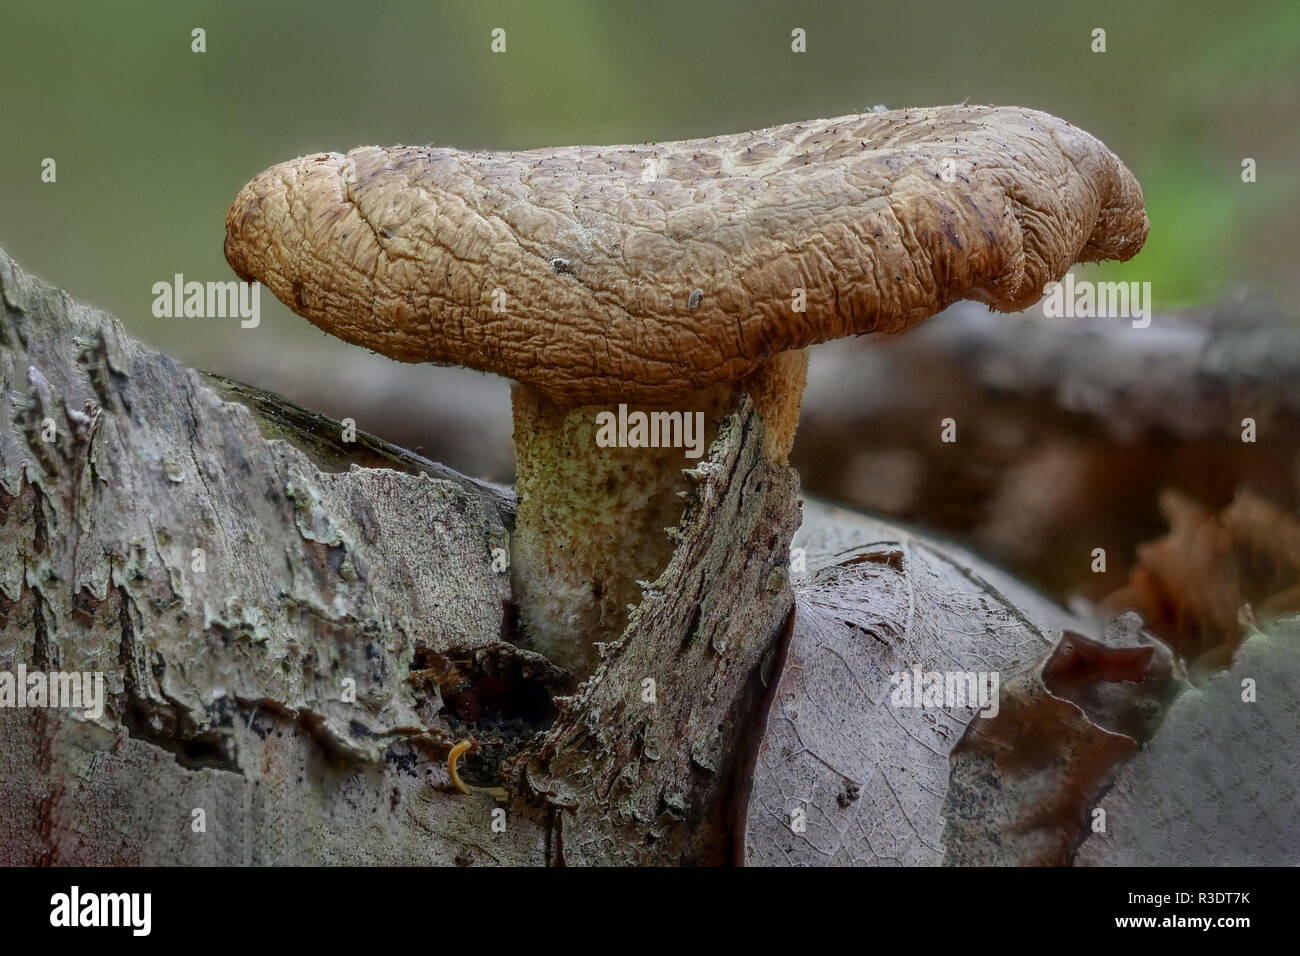 0506 Kahler Krempling - Paxillus involutus - fungo tra albero corteccia e foglie Foto Stock